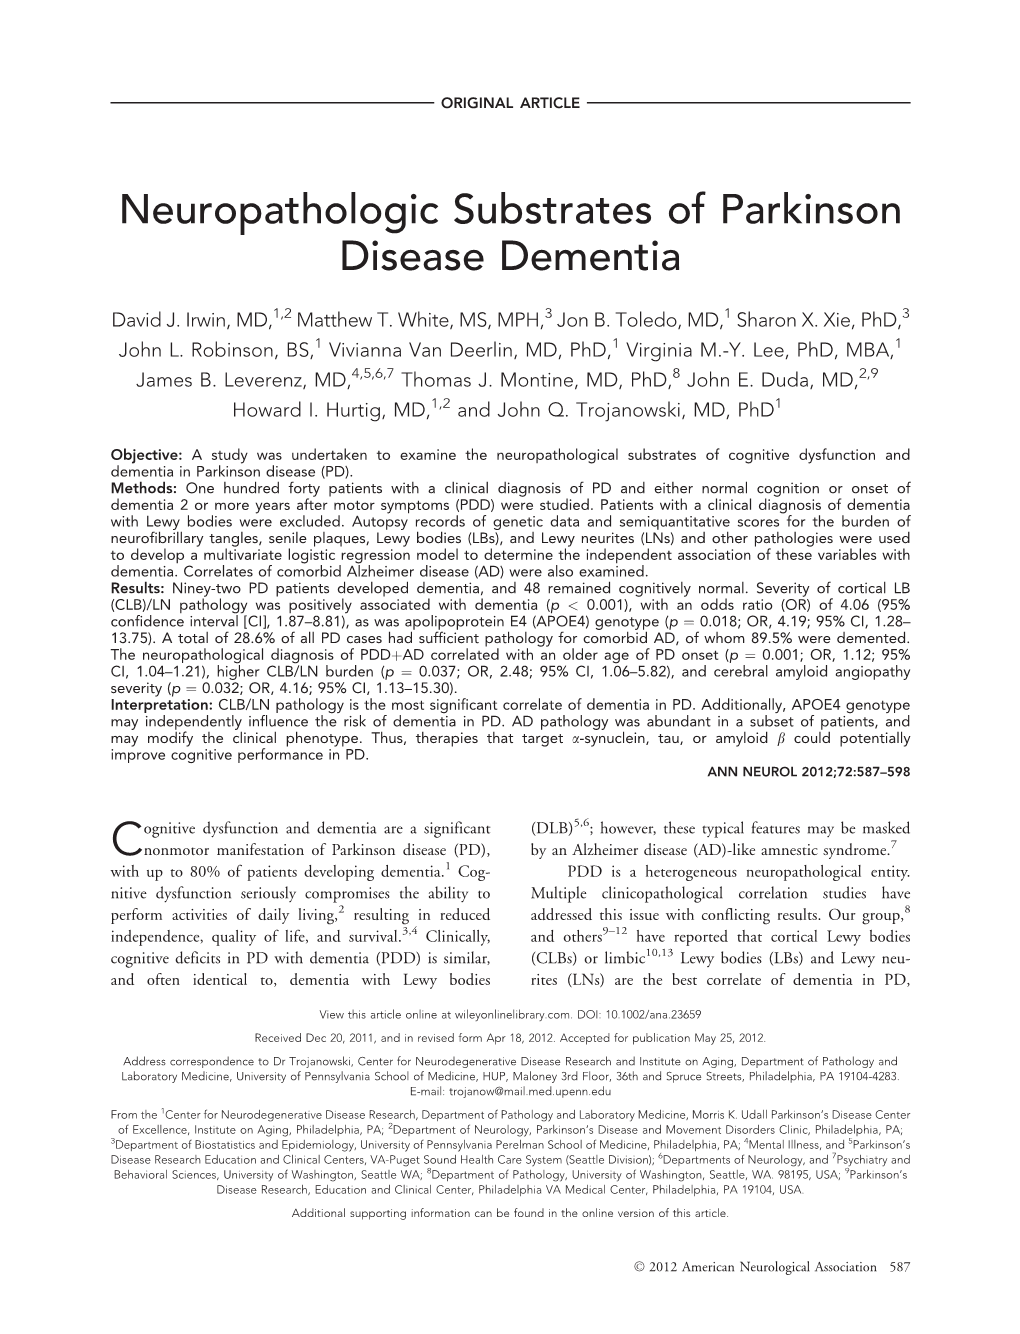 Neuropathologic Substrates of Parkinson Disease Dementia